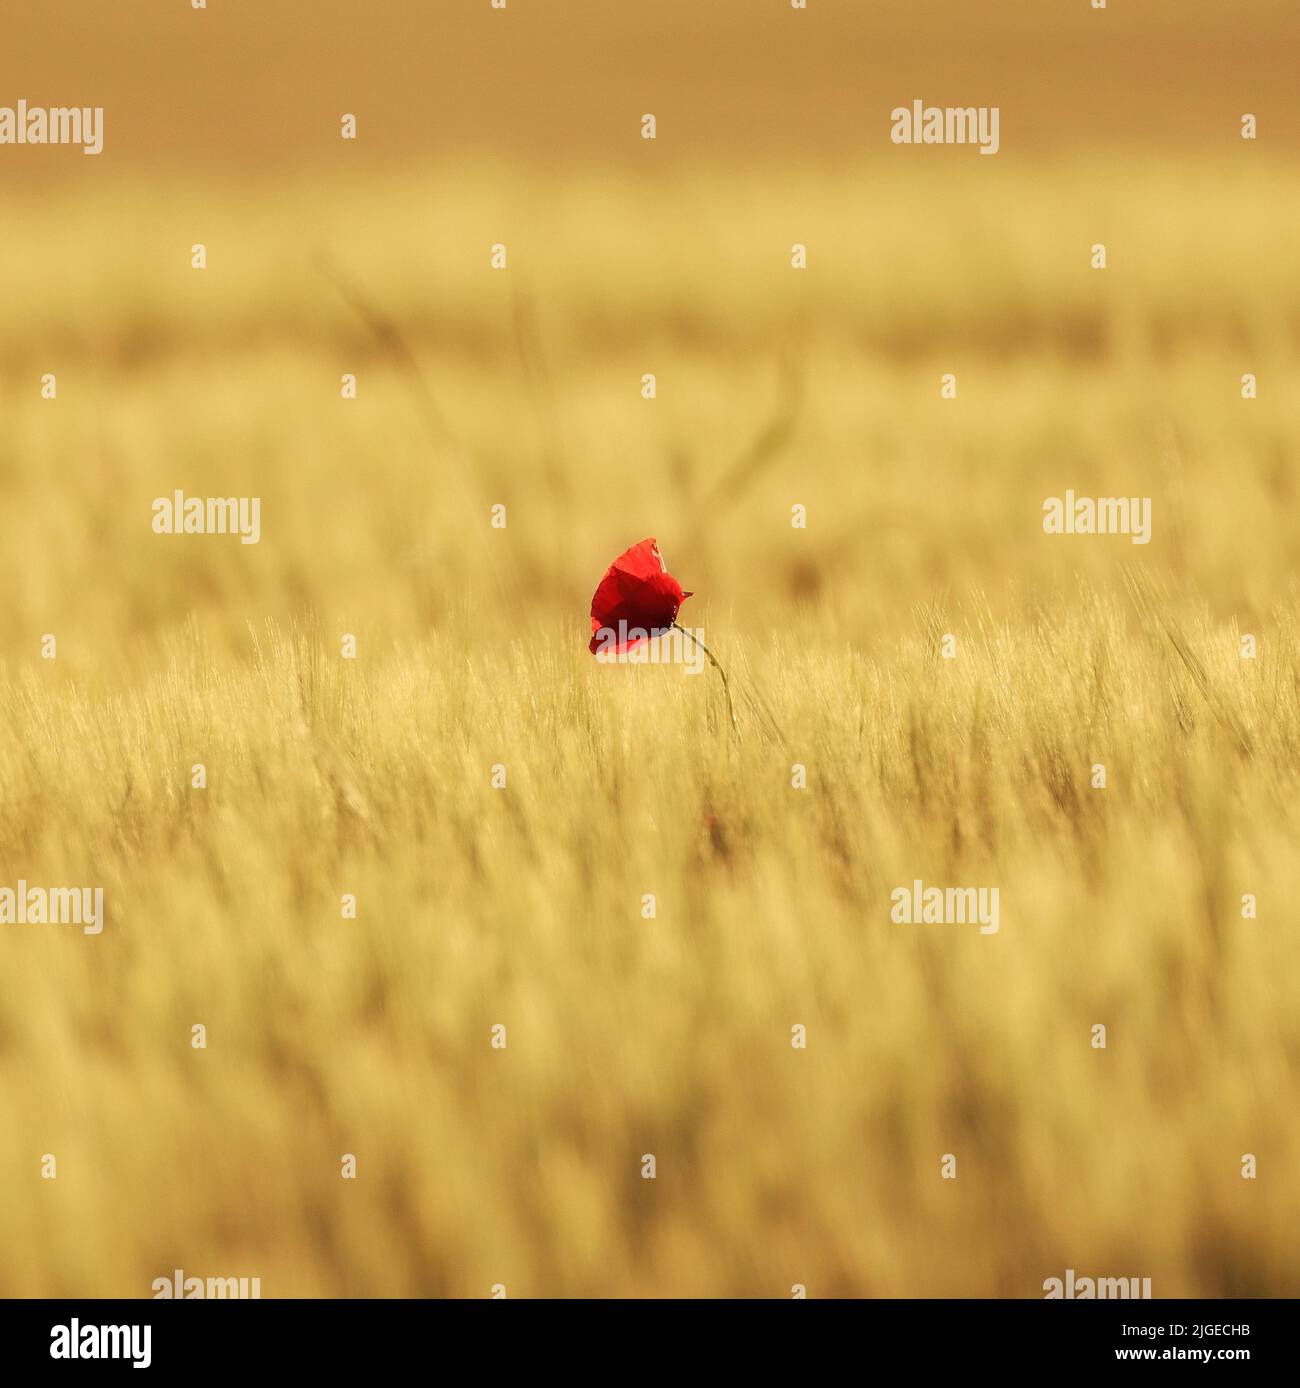 One red poppy flower in a wheat field Stock Photo